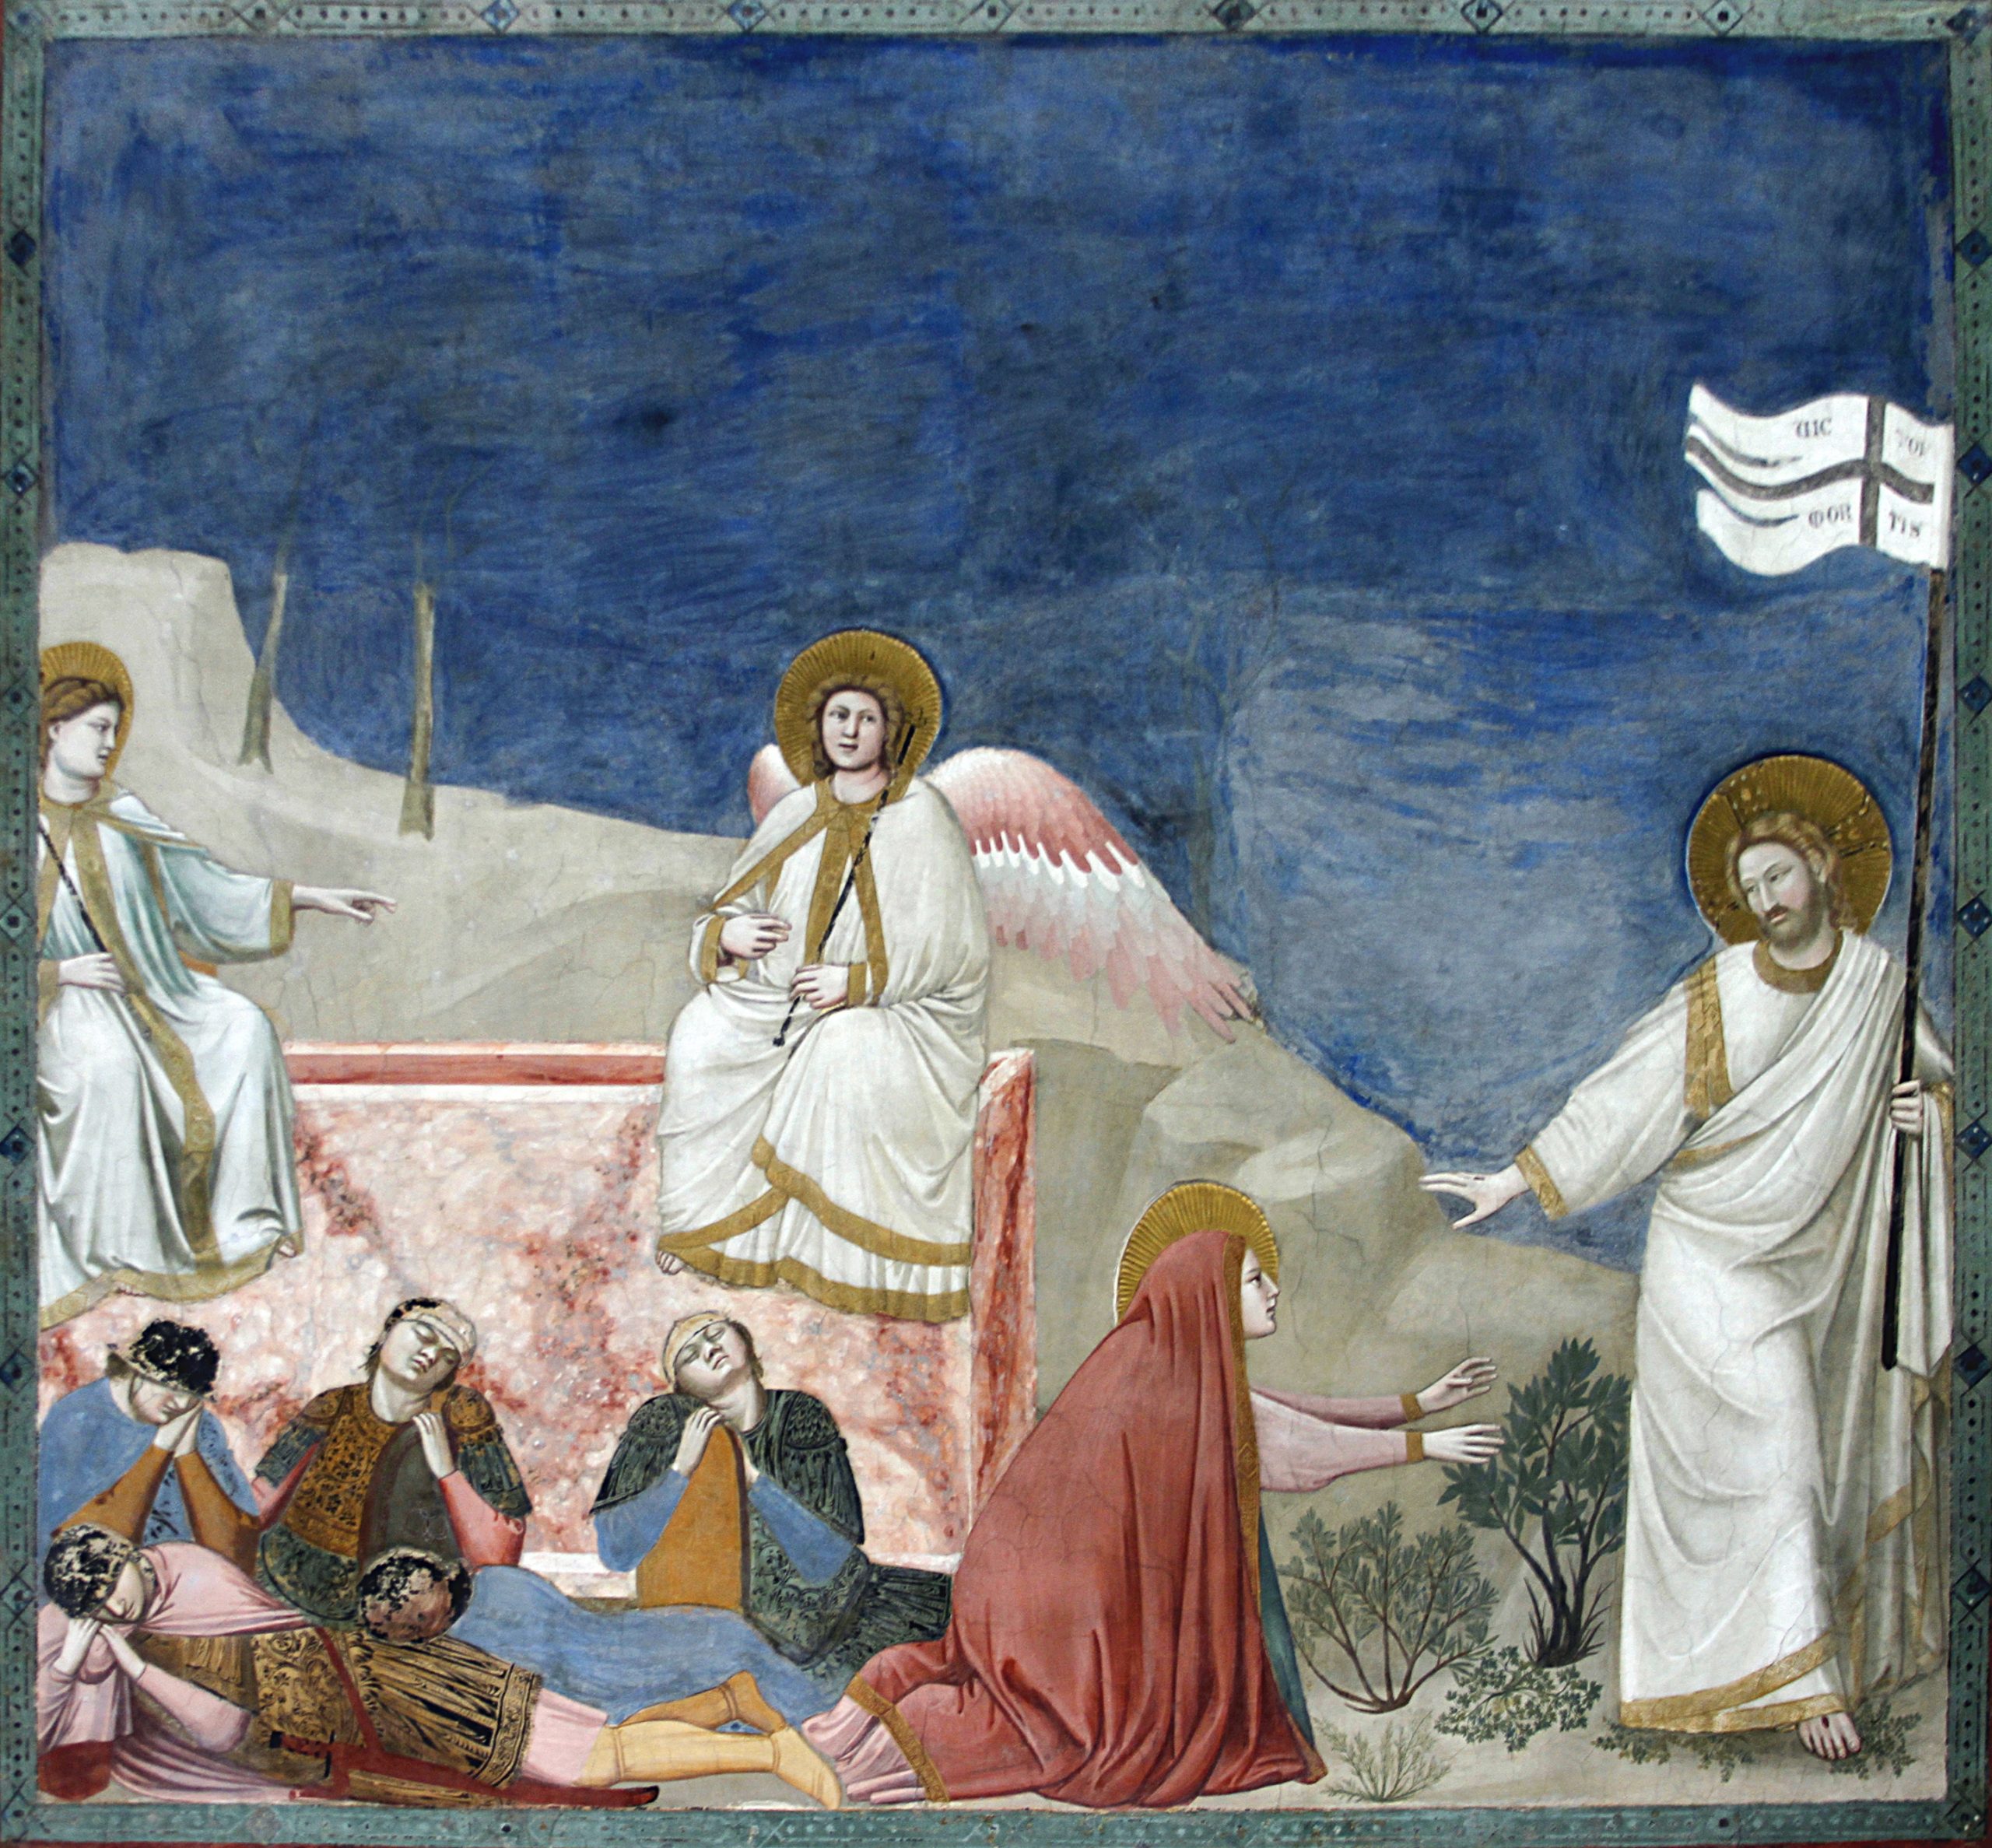 Abb. 3: Giotto di Bondone, Noli me tangere, Padua, Arenakapelle, um 1300. Foto: Wikimedia Commons © José Luiz Bernardes Ribeiro / CC BY-SA 4.0.